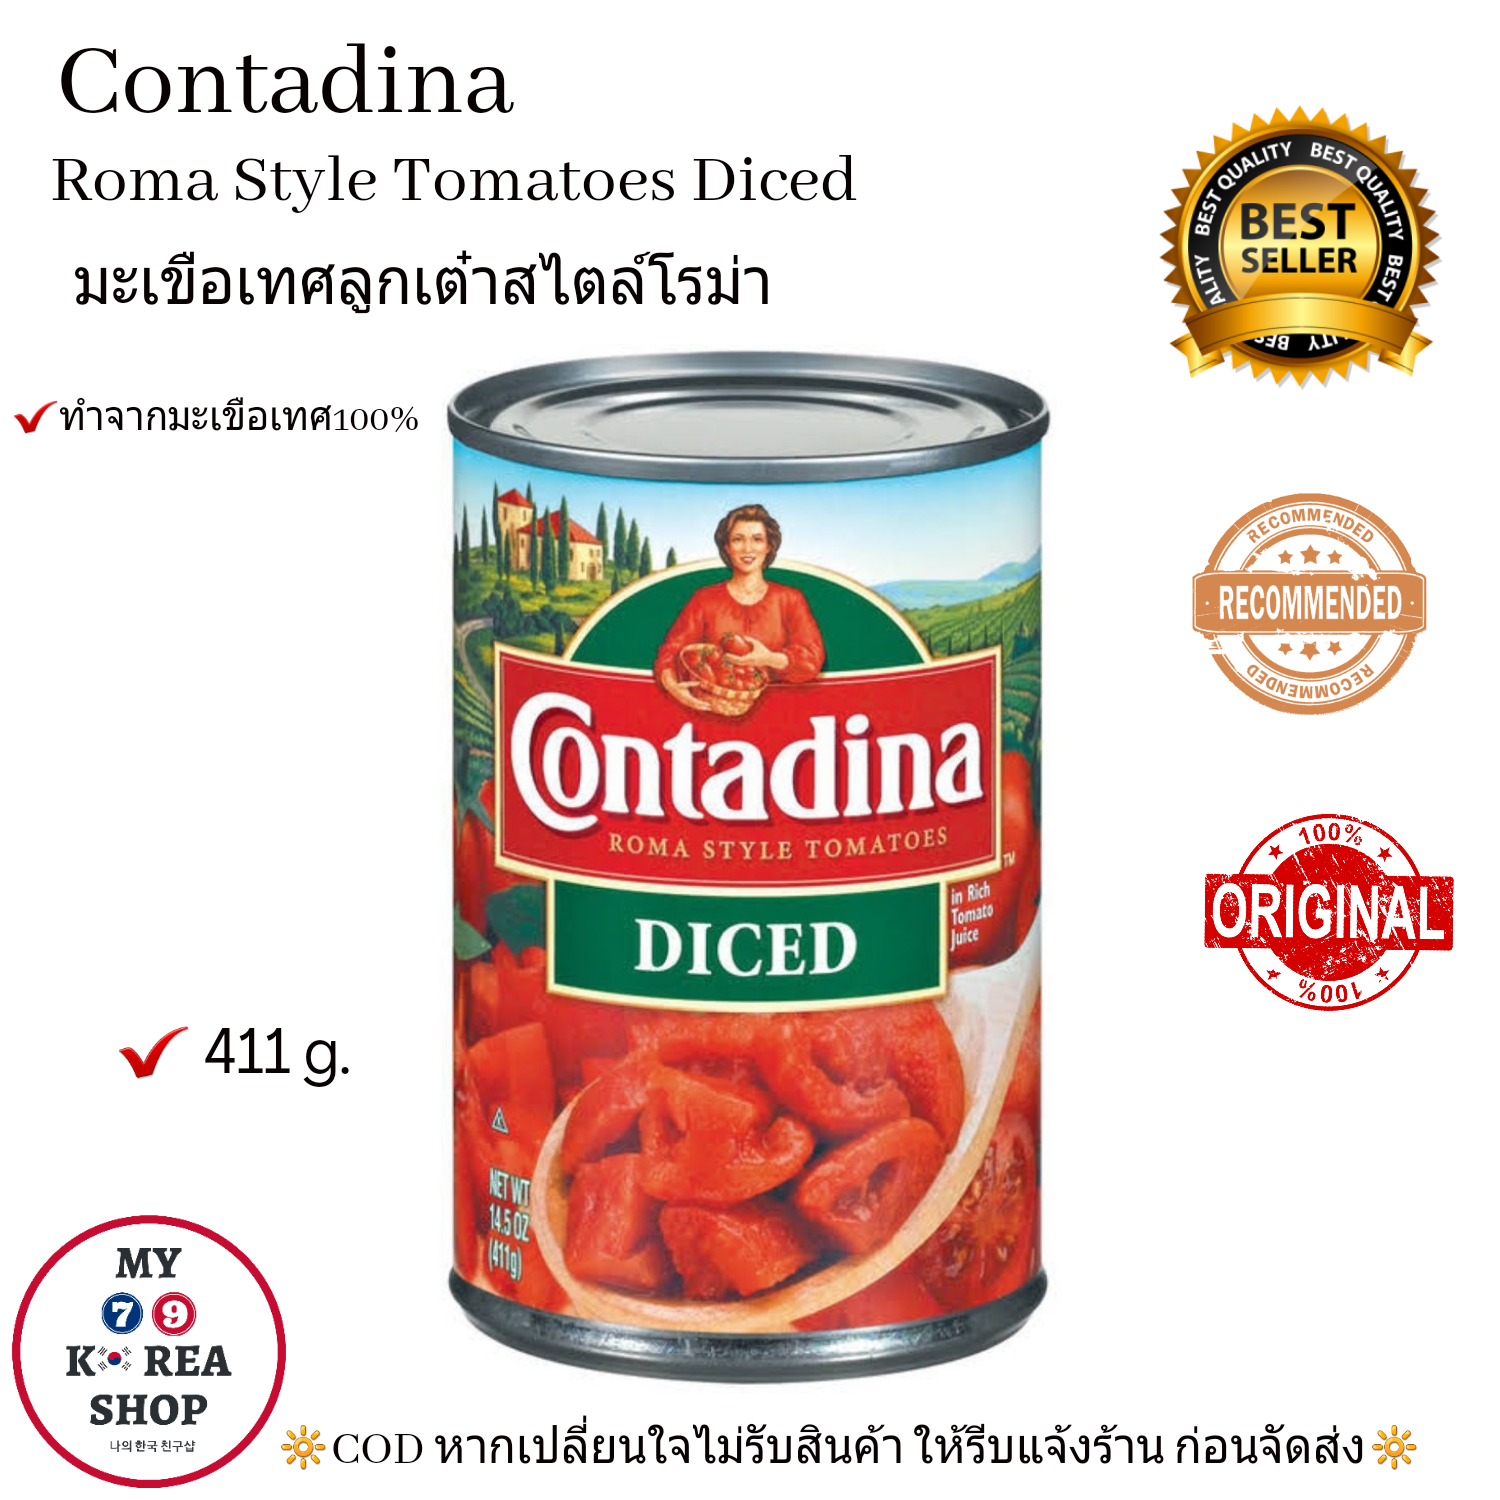 Diced tomatoes มะเขือเทศหั่นลูกเต๋า คอนตาดินา 411g. Contadina Roma Style Diced Tomatoes